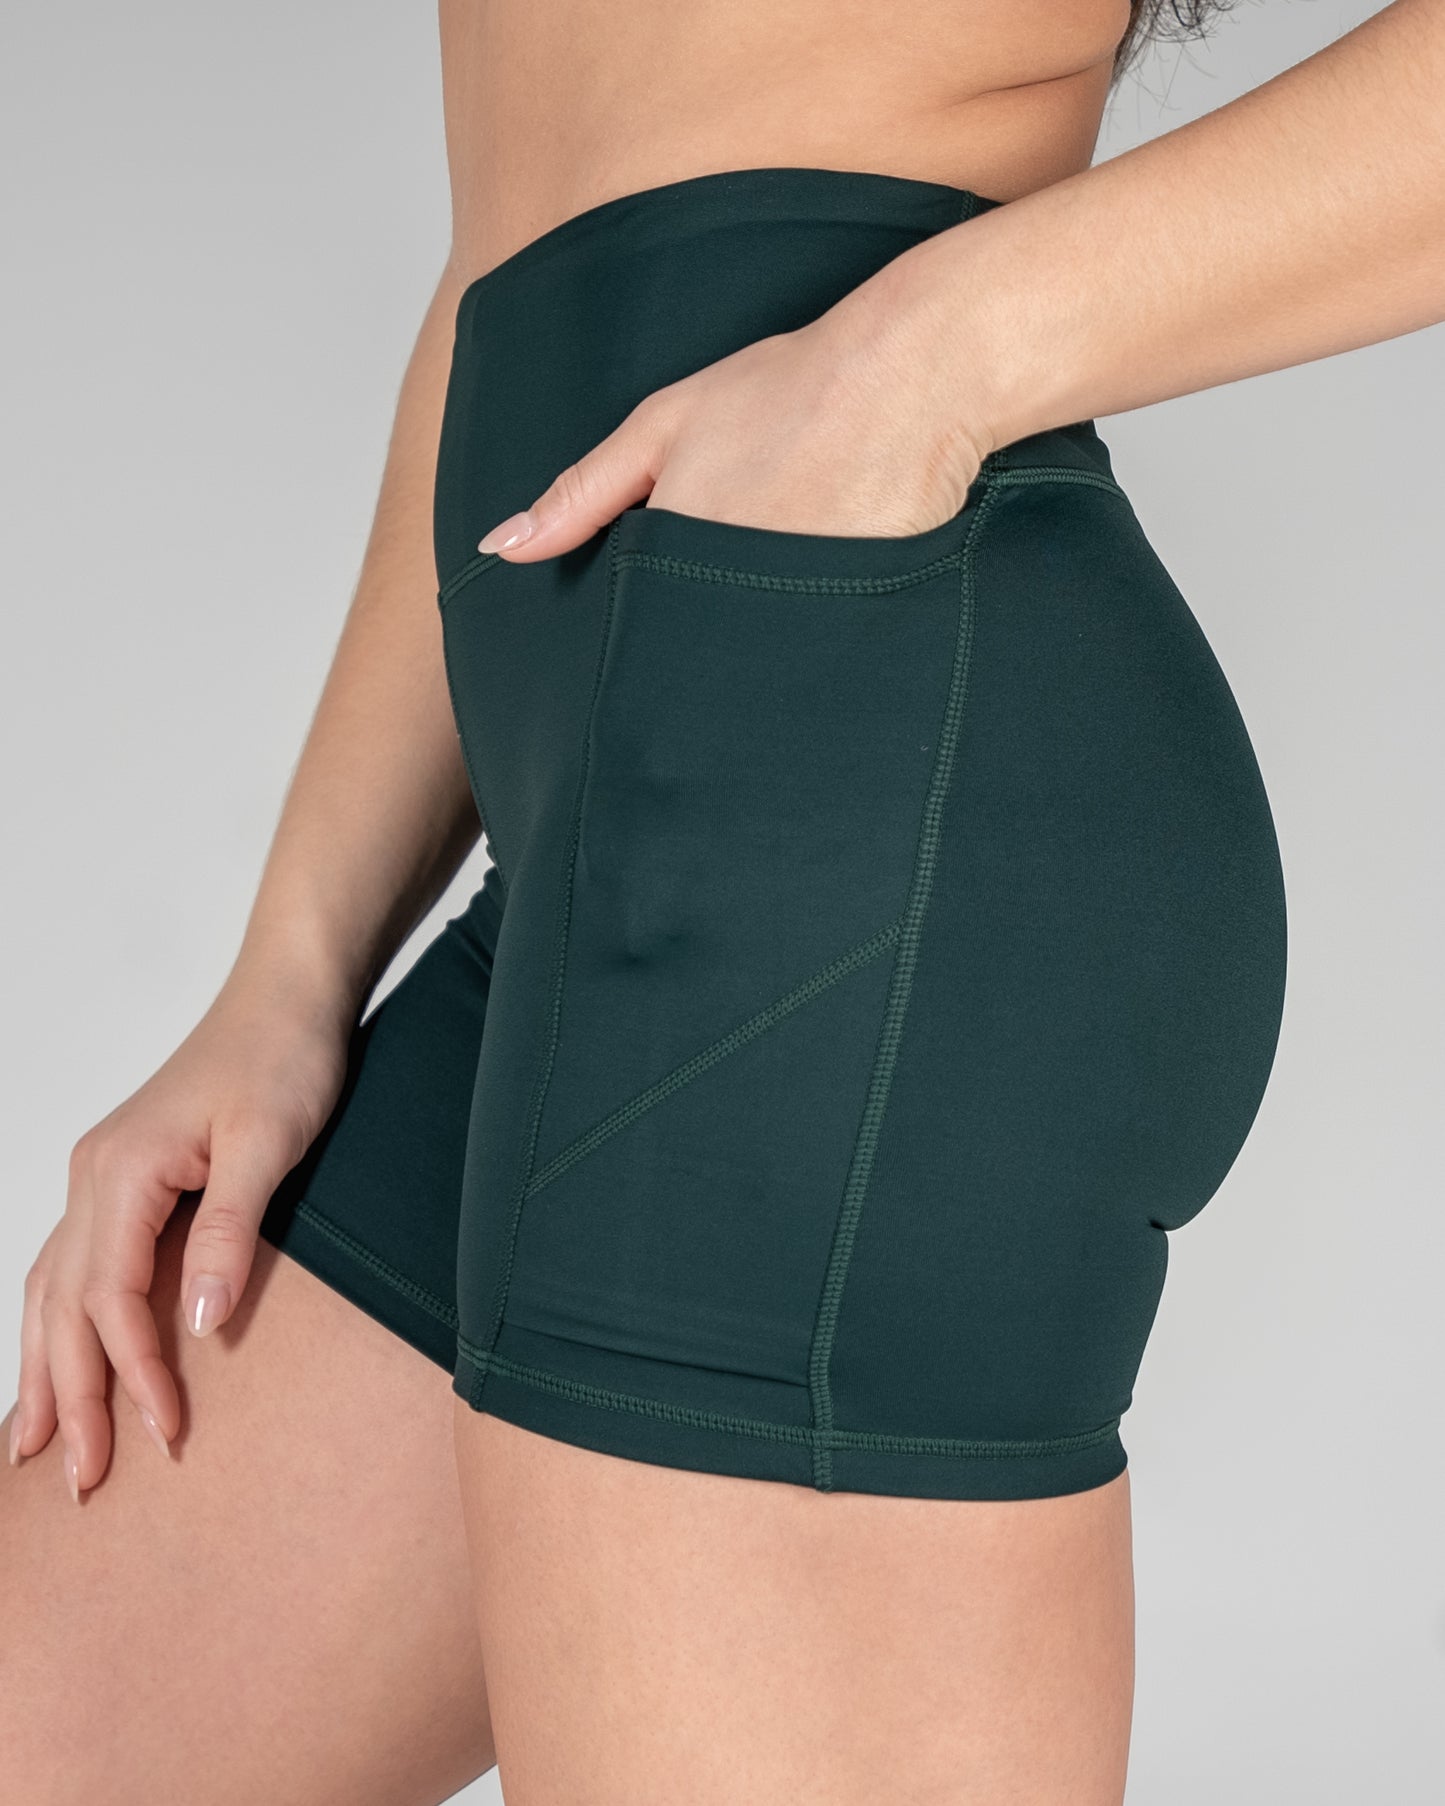 Baseline Shorts (5 in. inseam) - Juniper